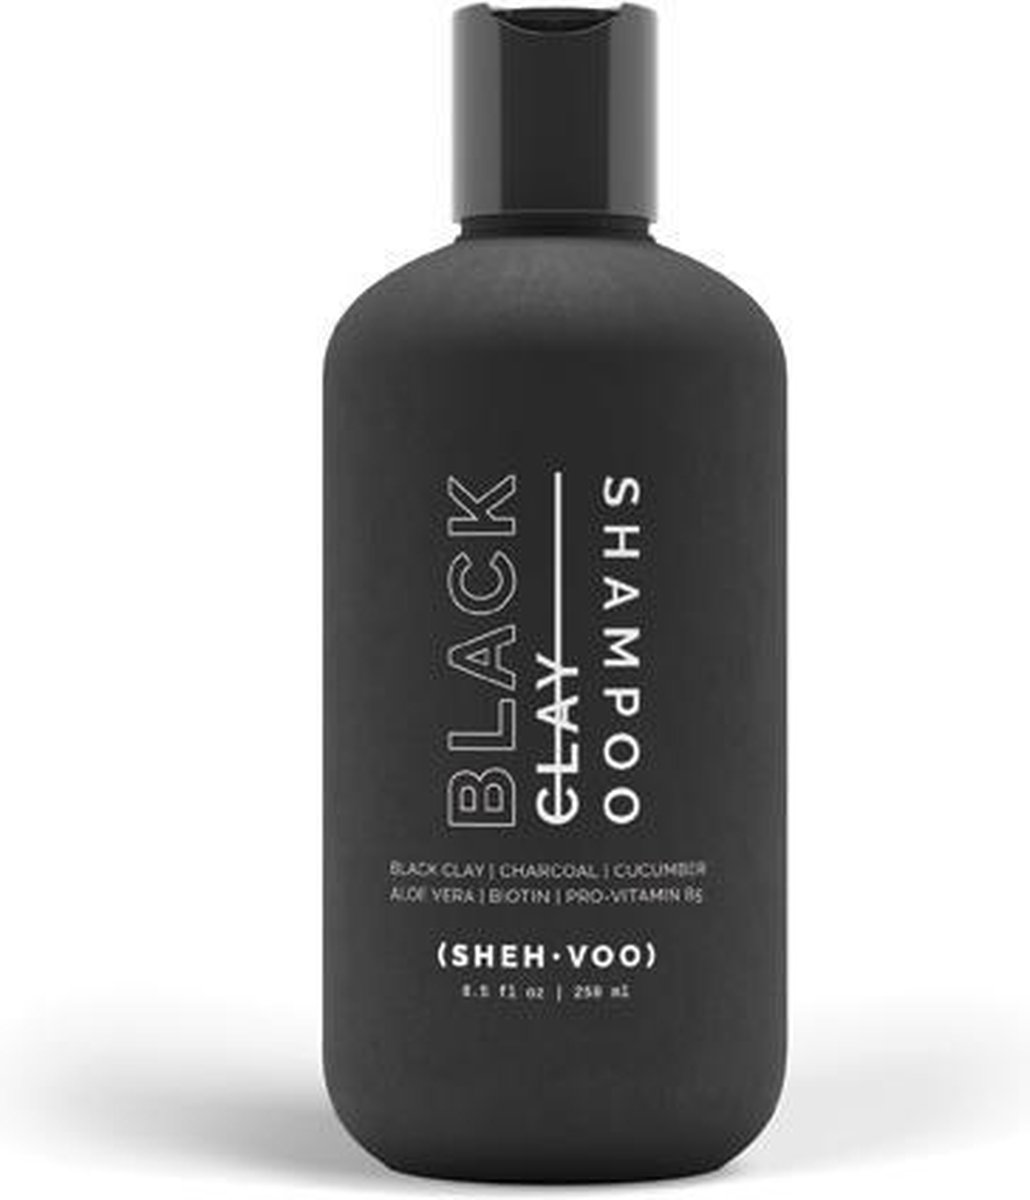 Shehvoo Black Clay Shampoo 250 ml.